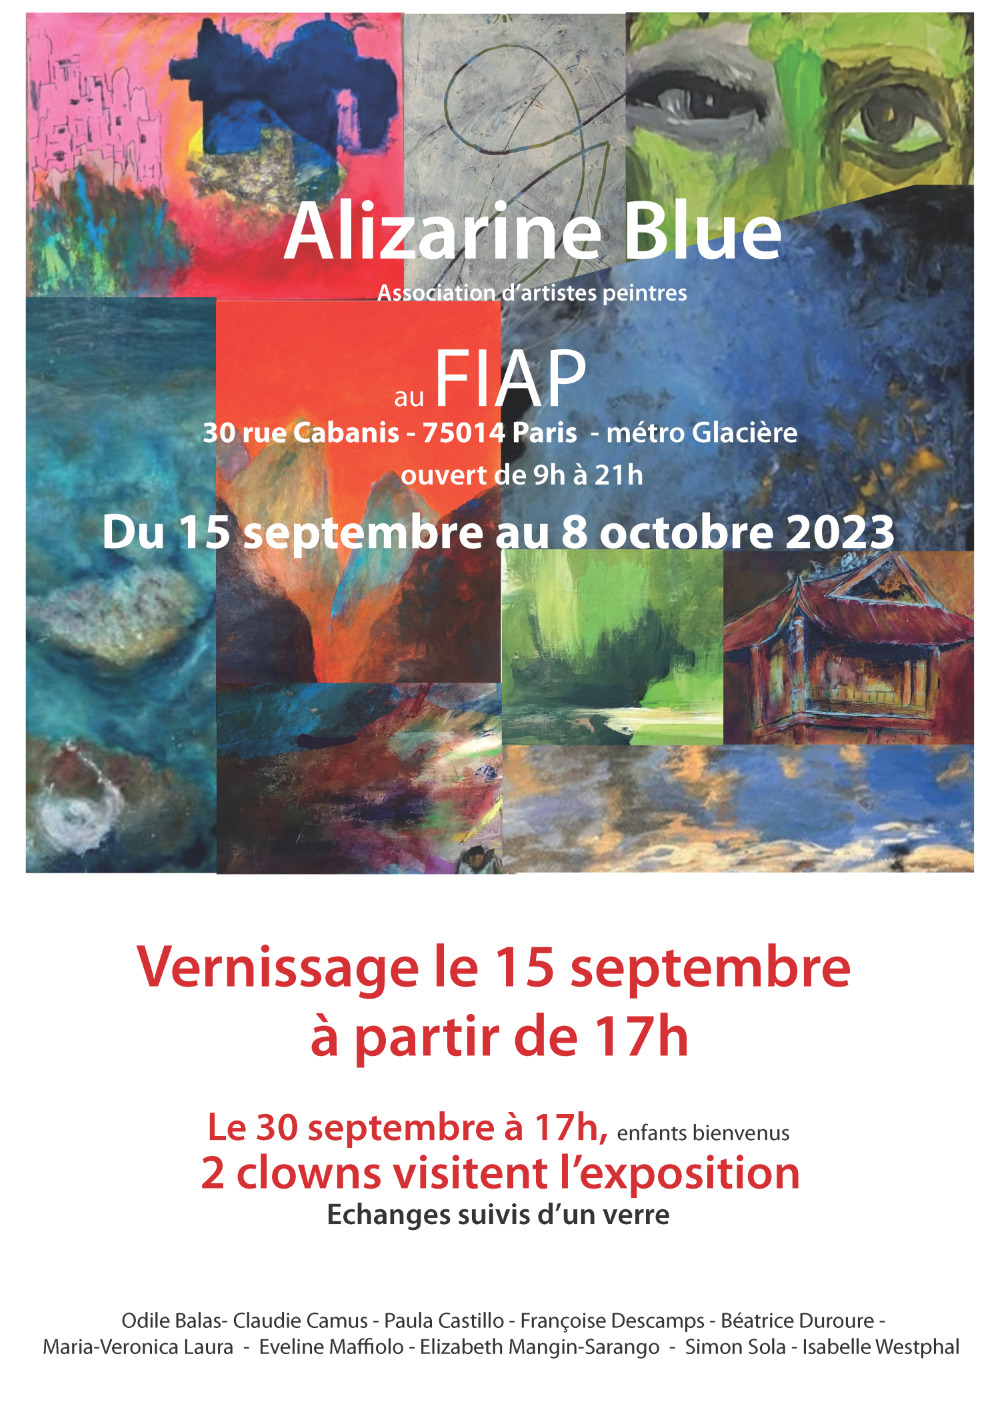 exhibition-alizarine-blue